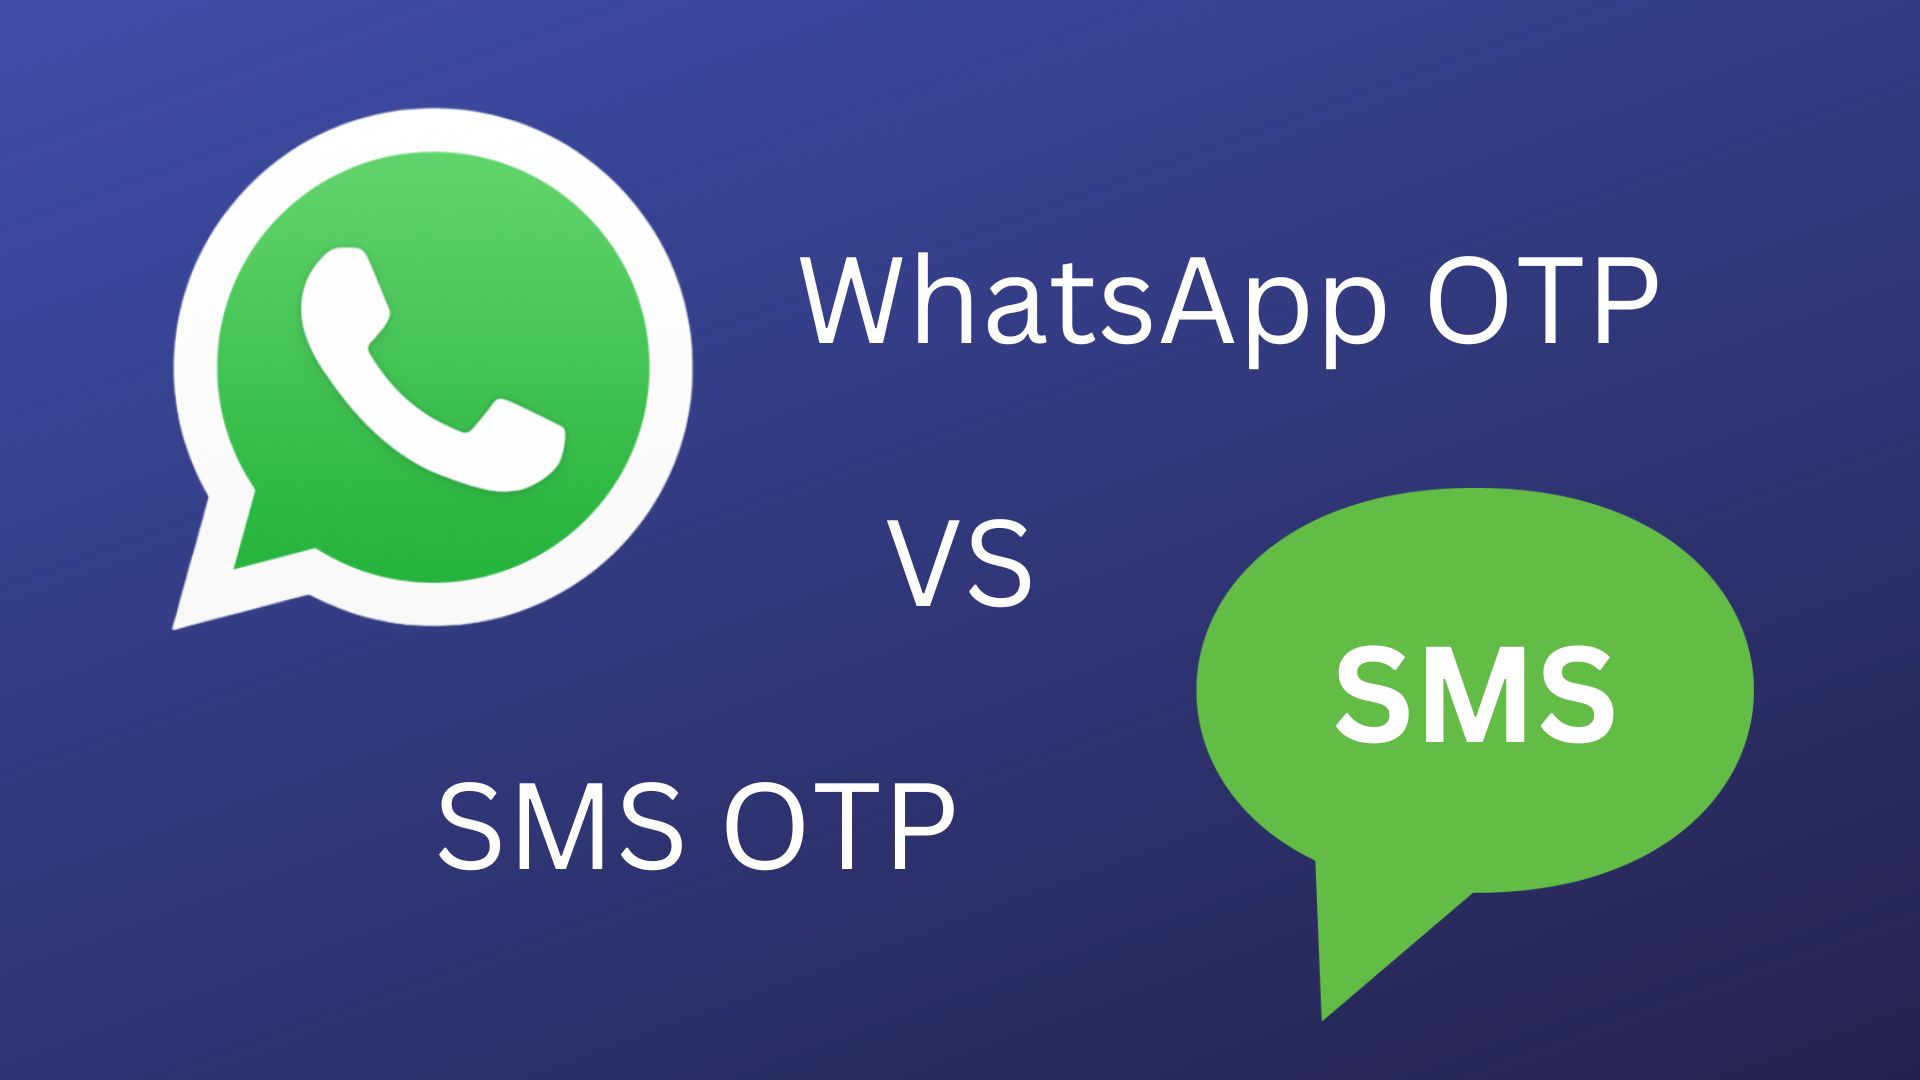 WhatsApp OTP VS SMS OTP